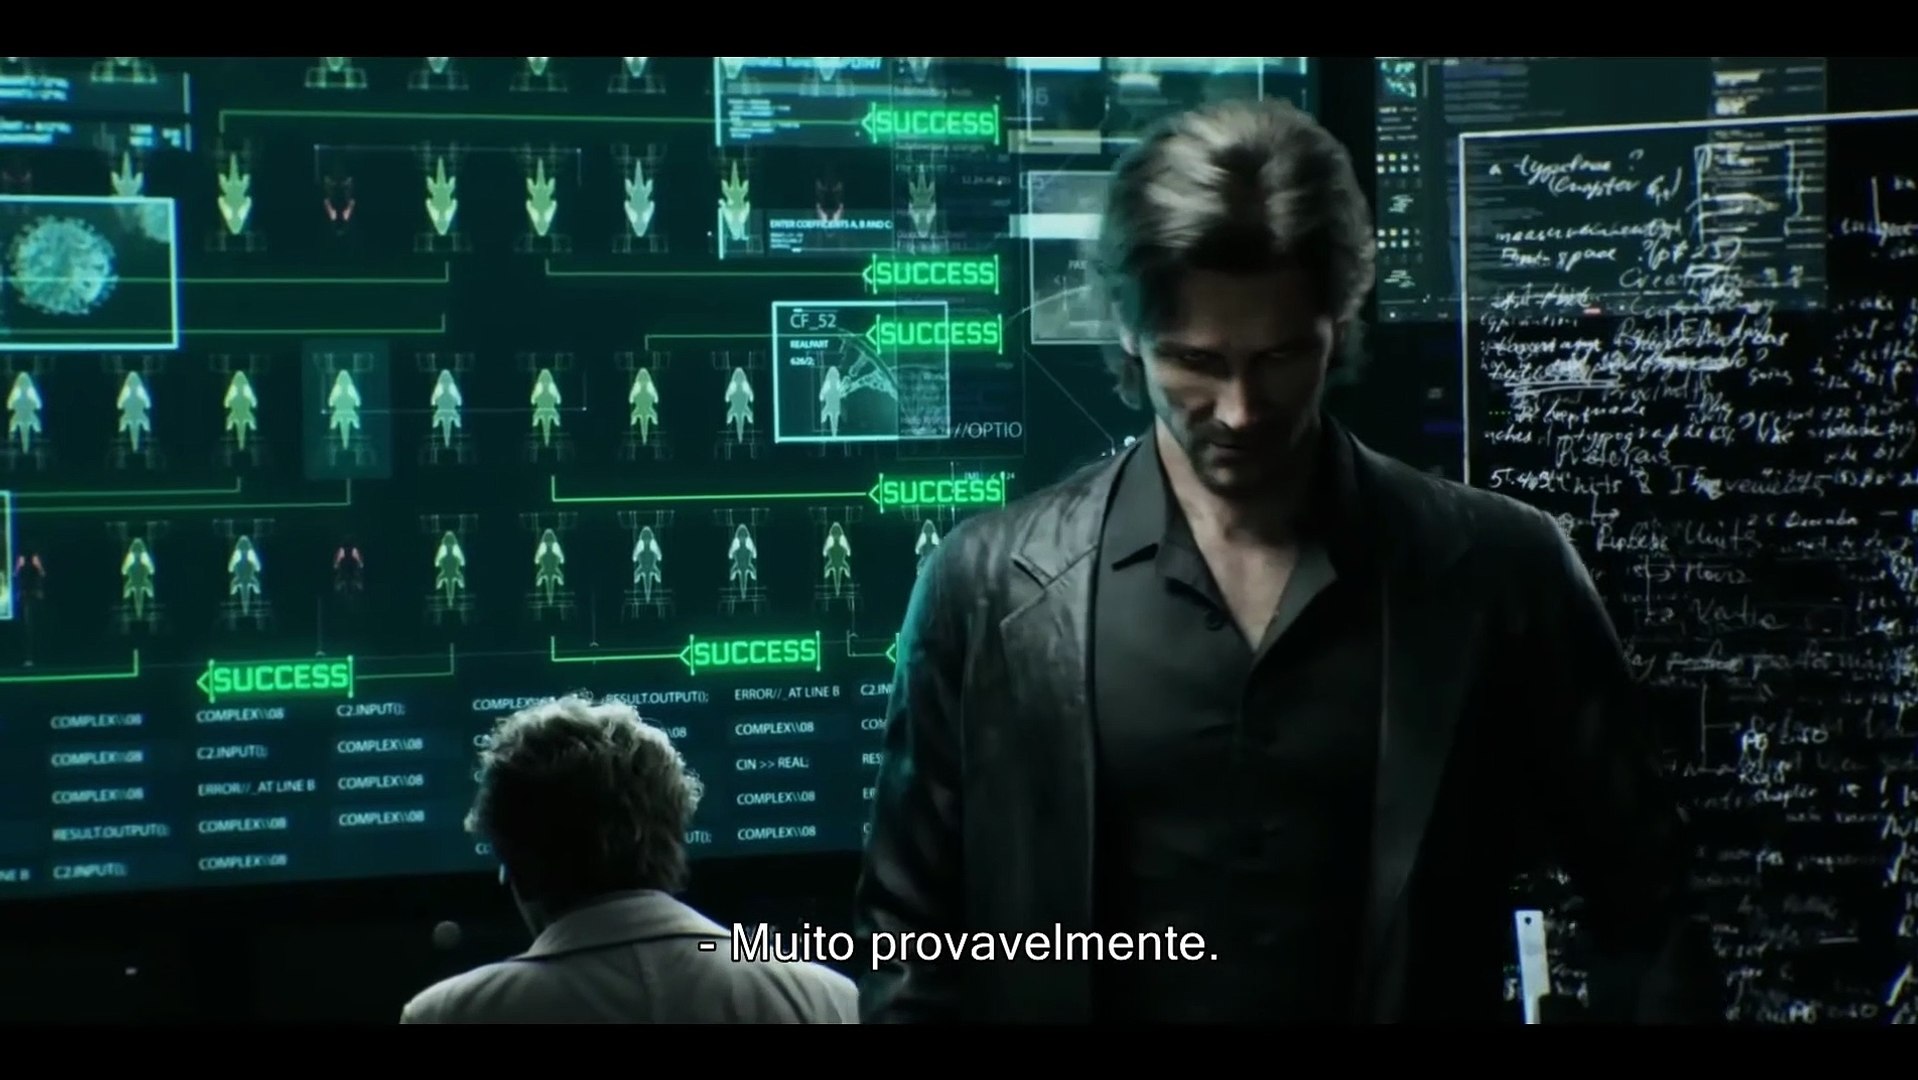 Resident Evil: Ilha da Morte, movie, 2023